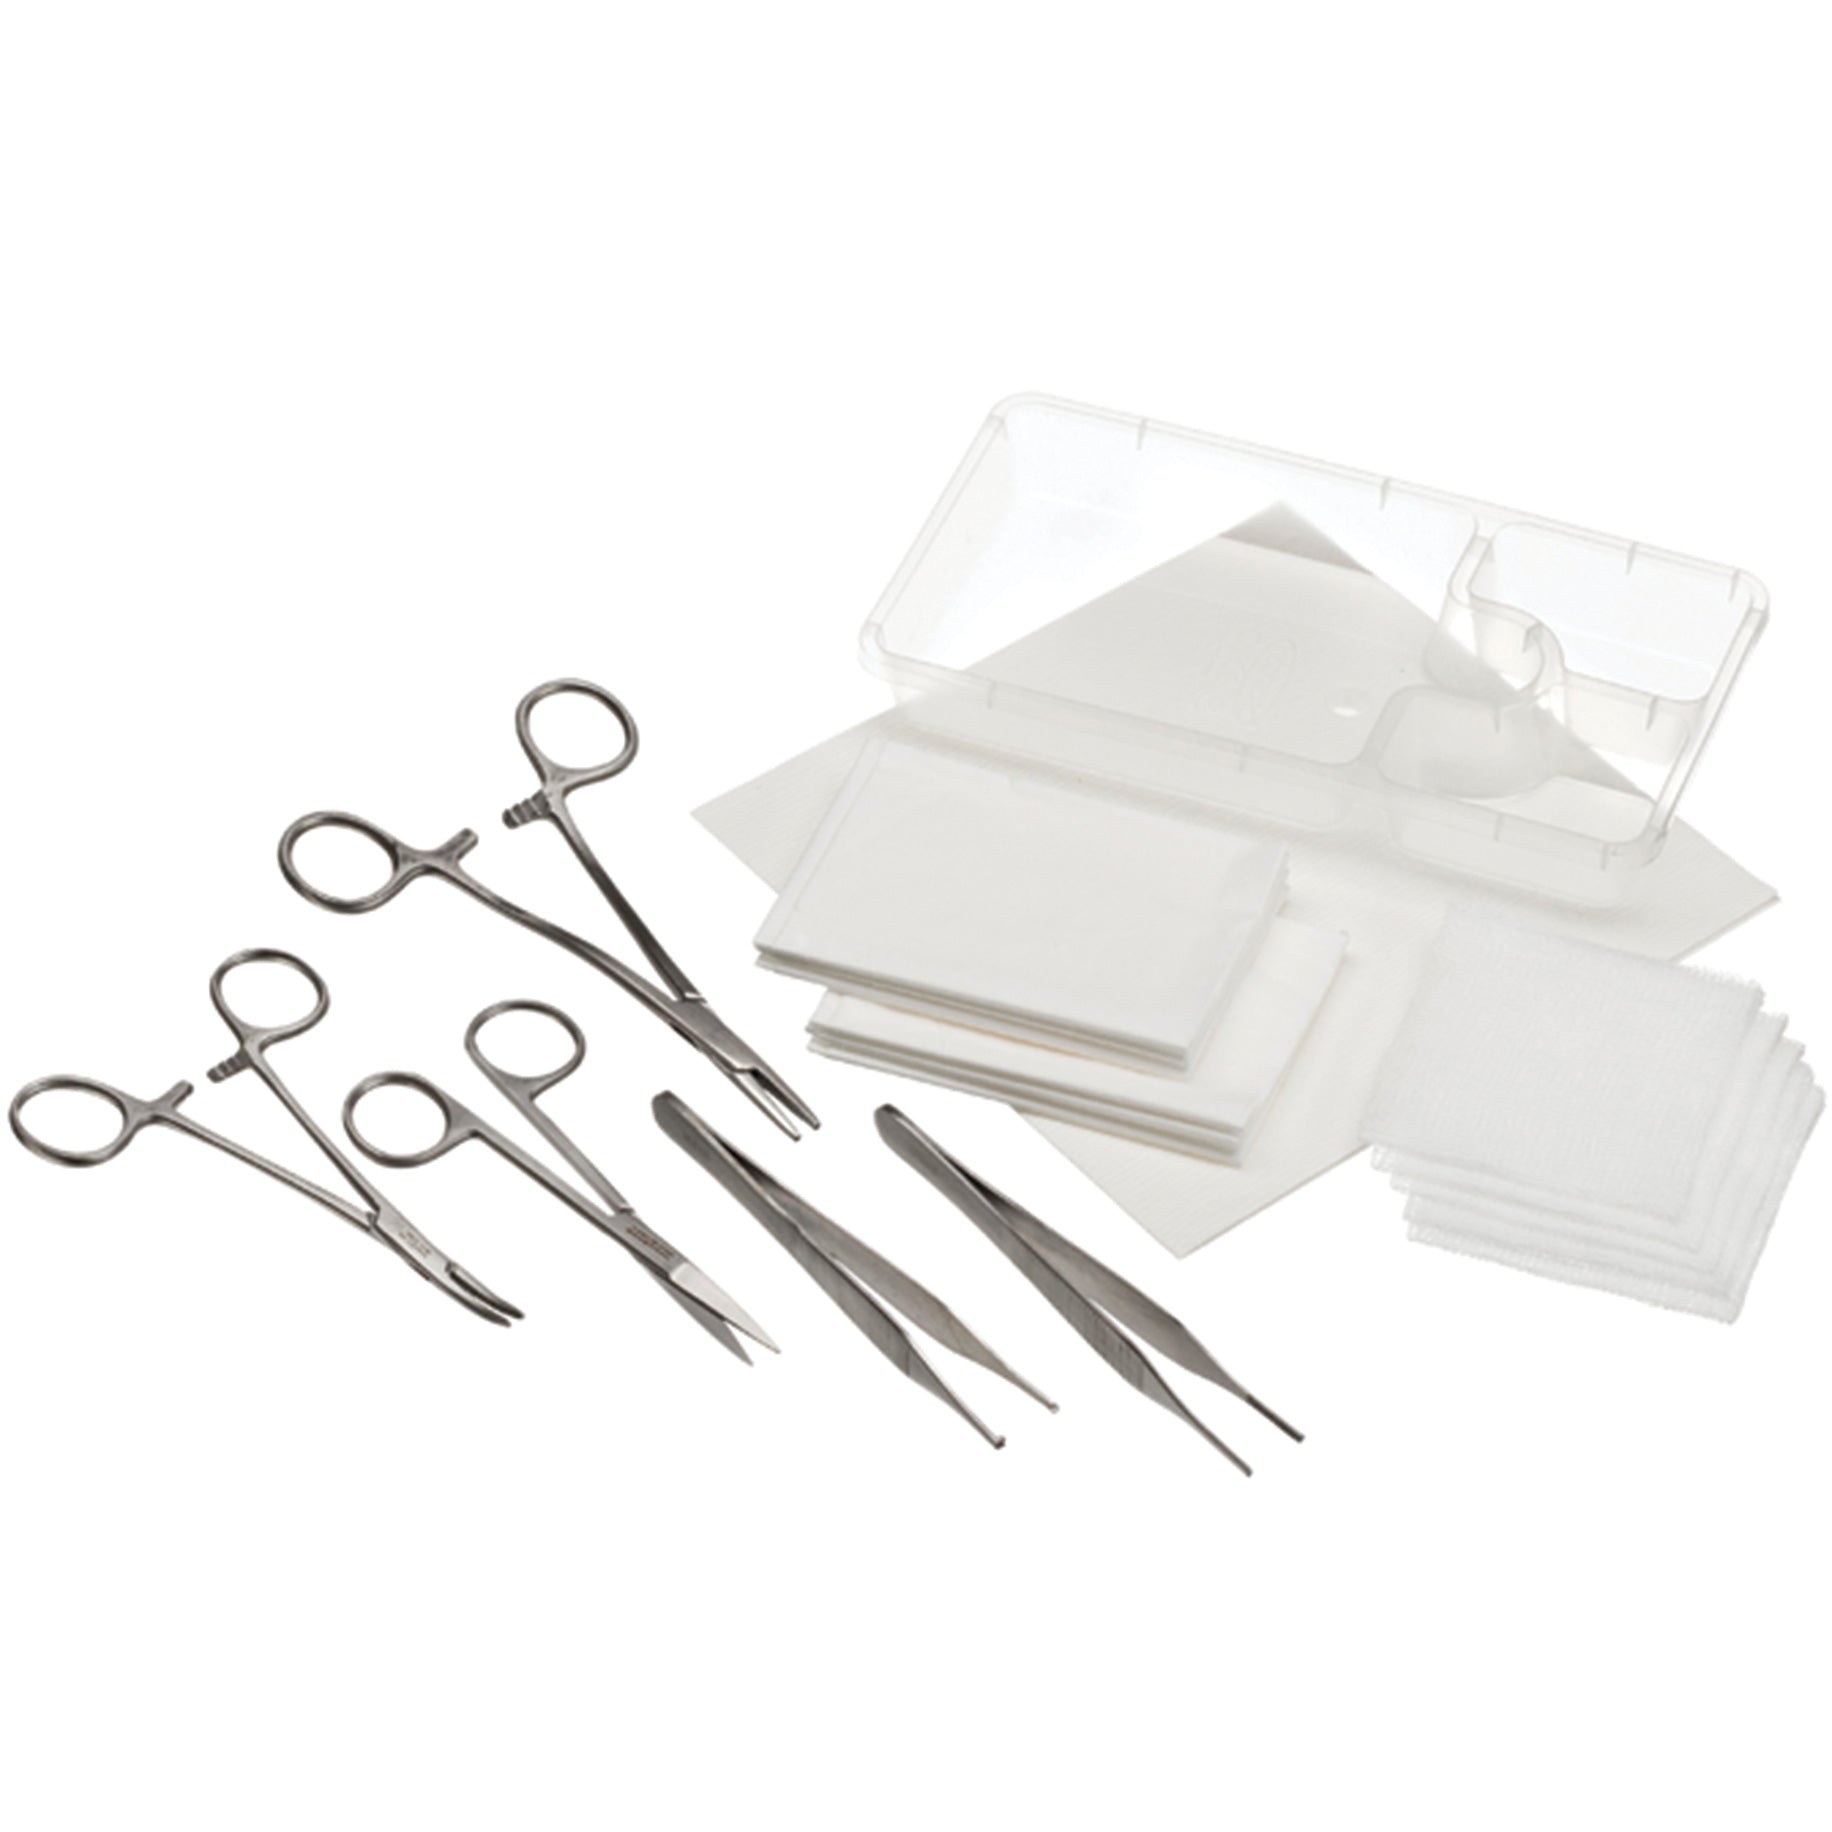 Sterile Single Use Minor Operations Pack